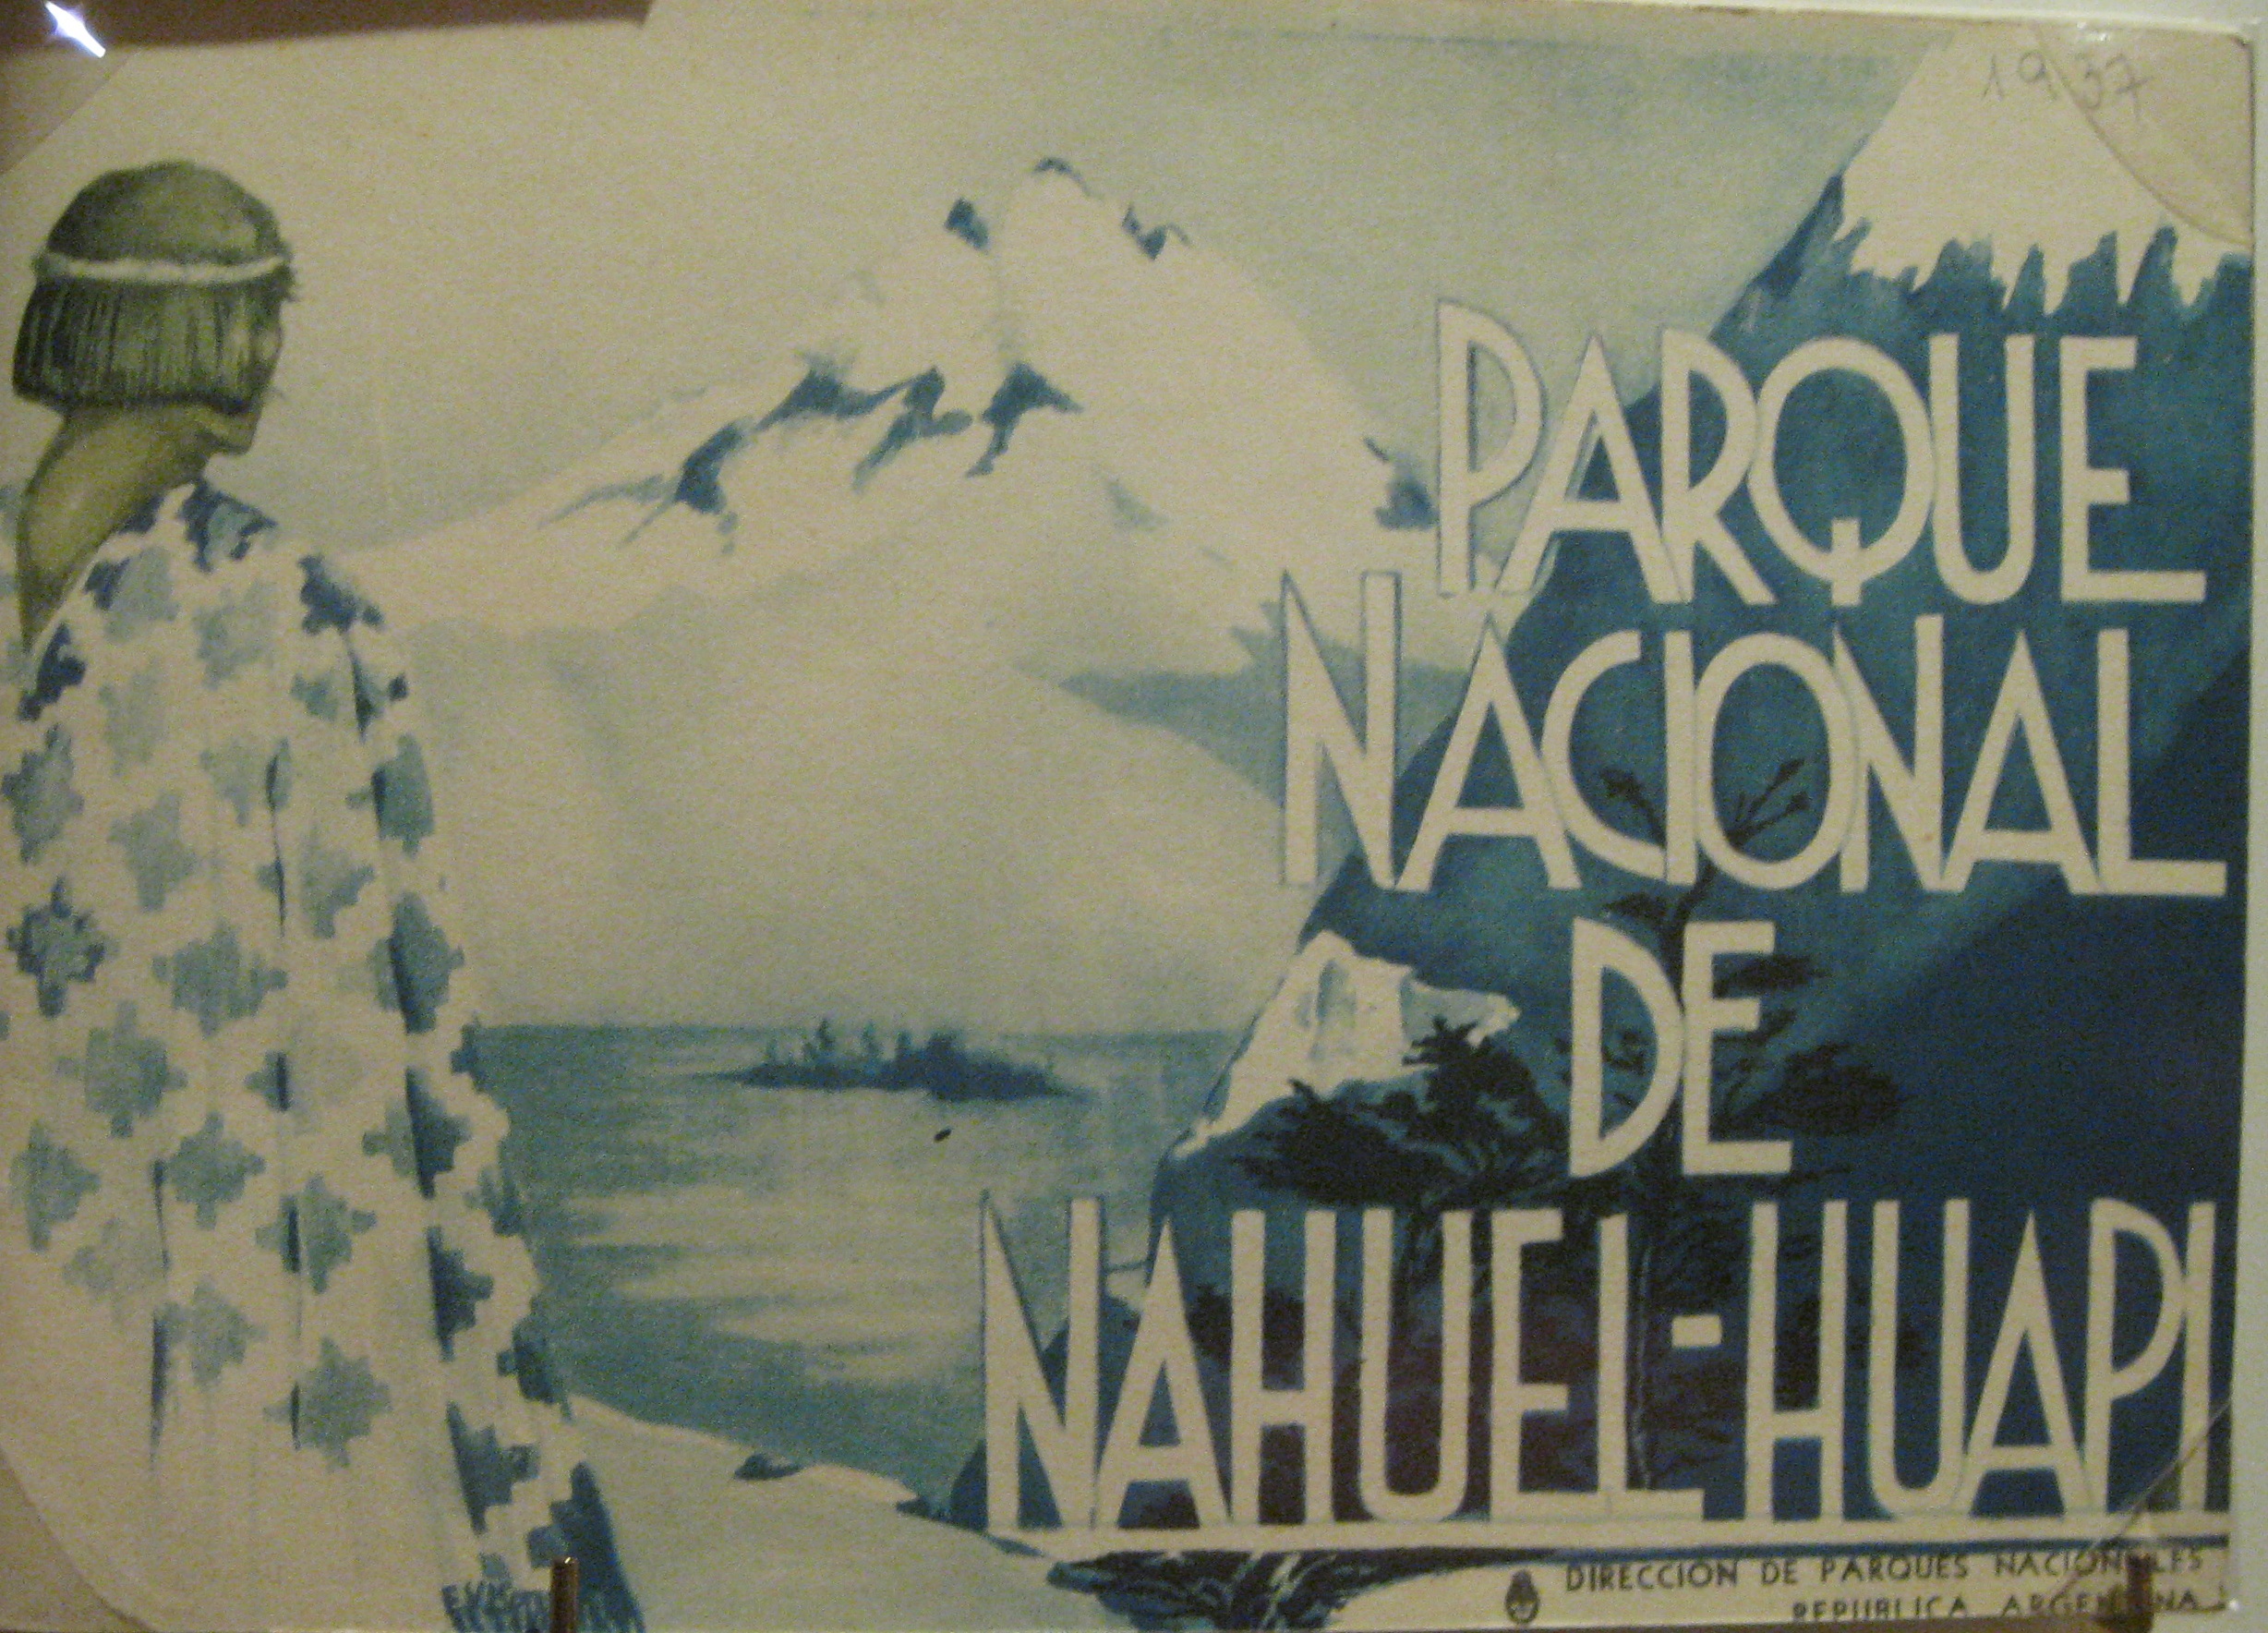 NahuelHuapiPamphlet1937museopatagonia 079